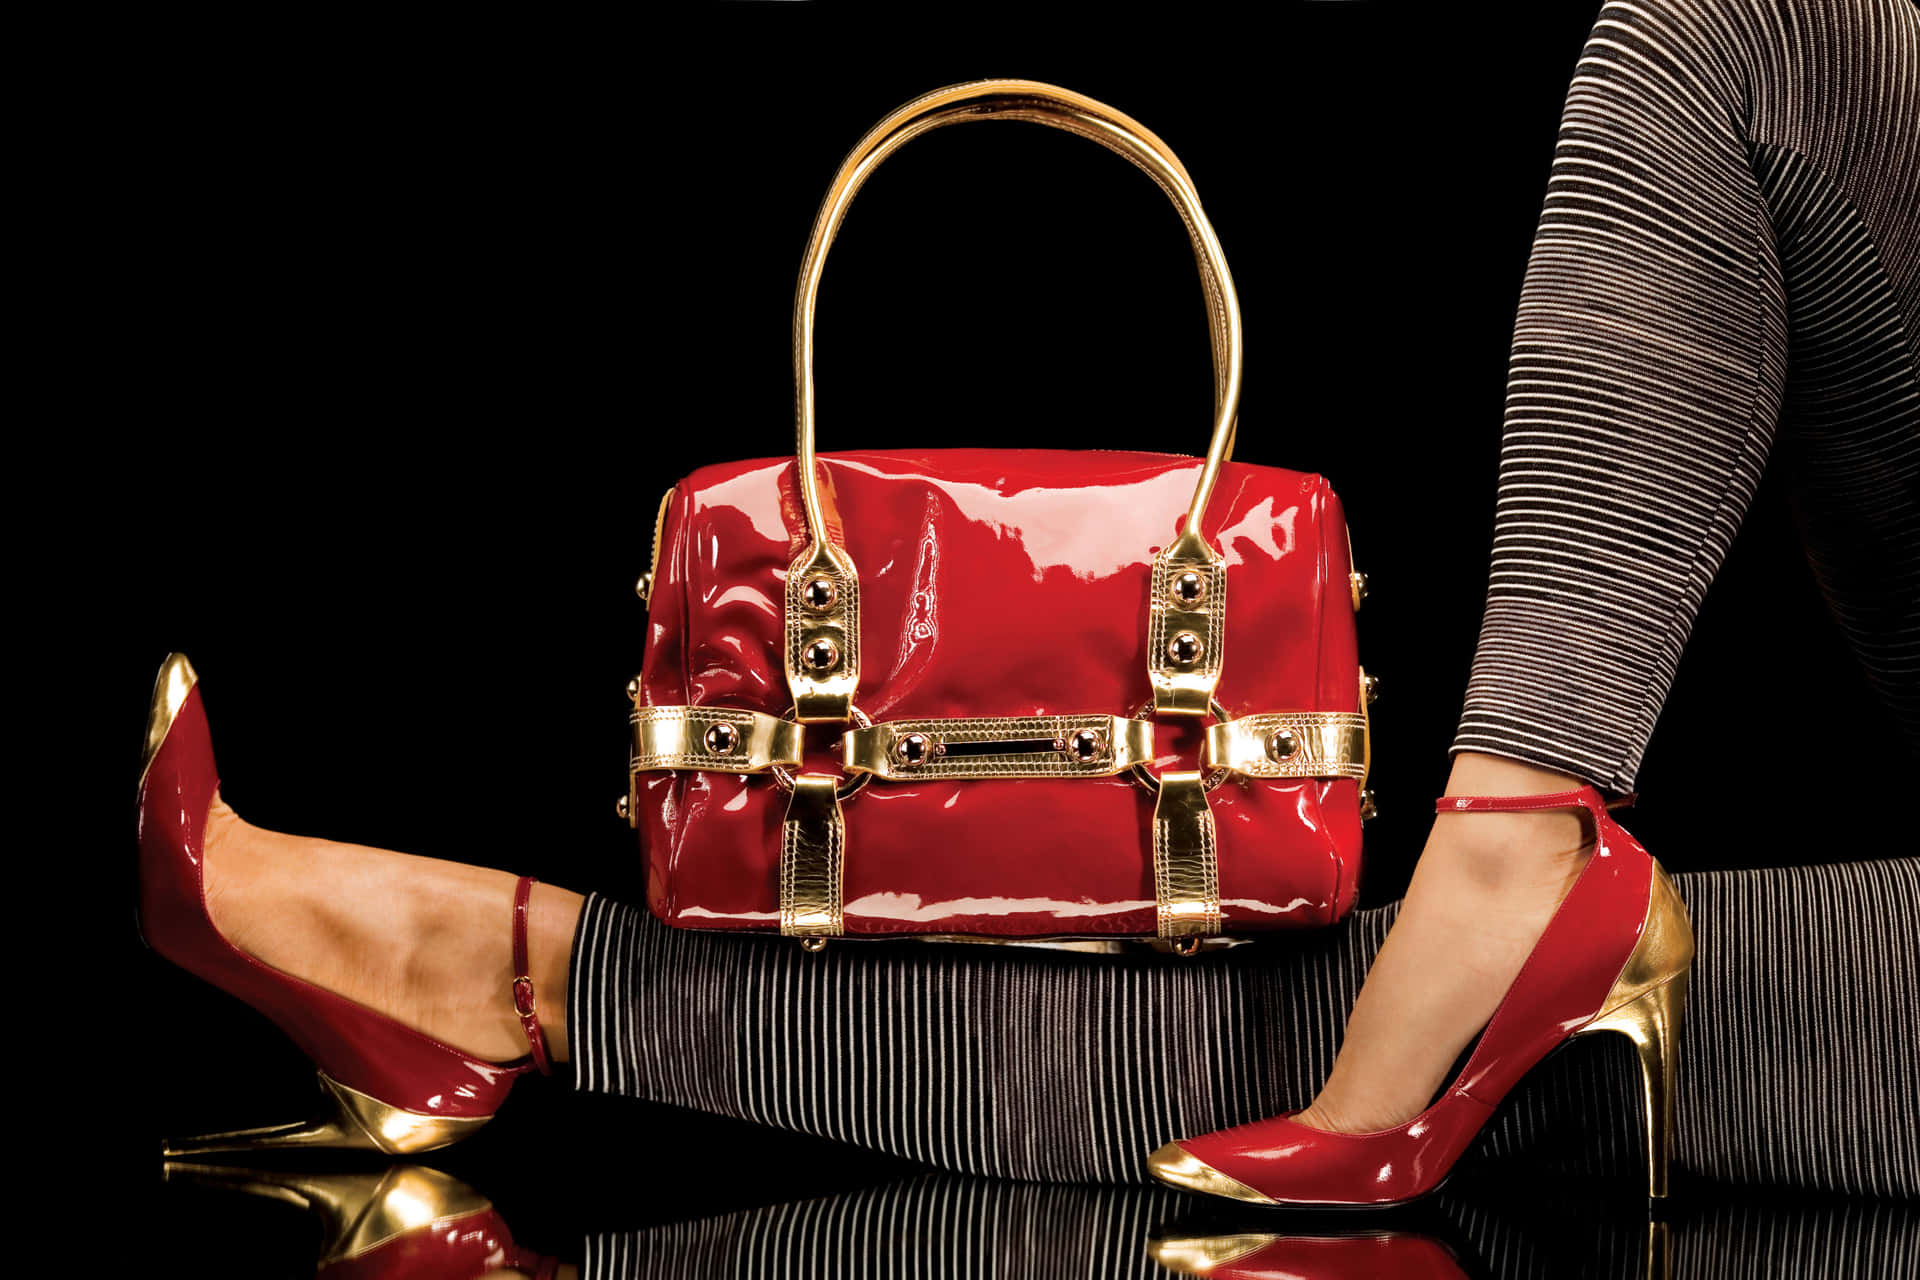 Red Heelsand Handbag Fashion Shoot Wallpaper